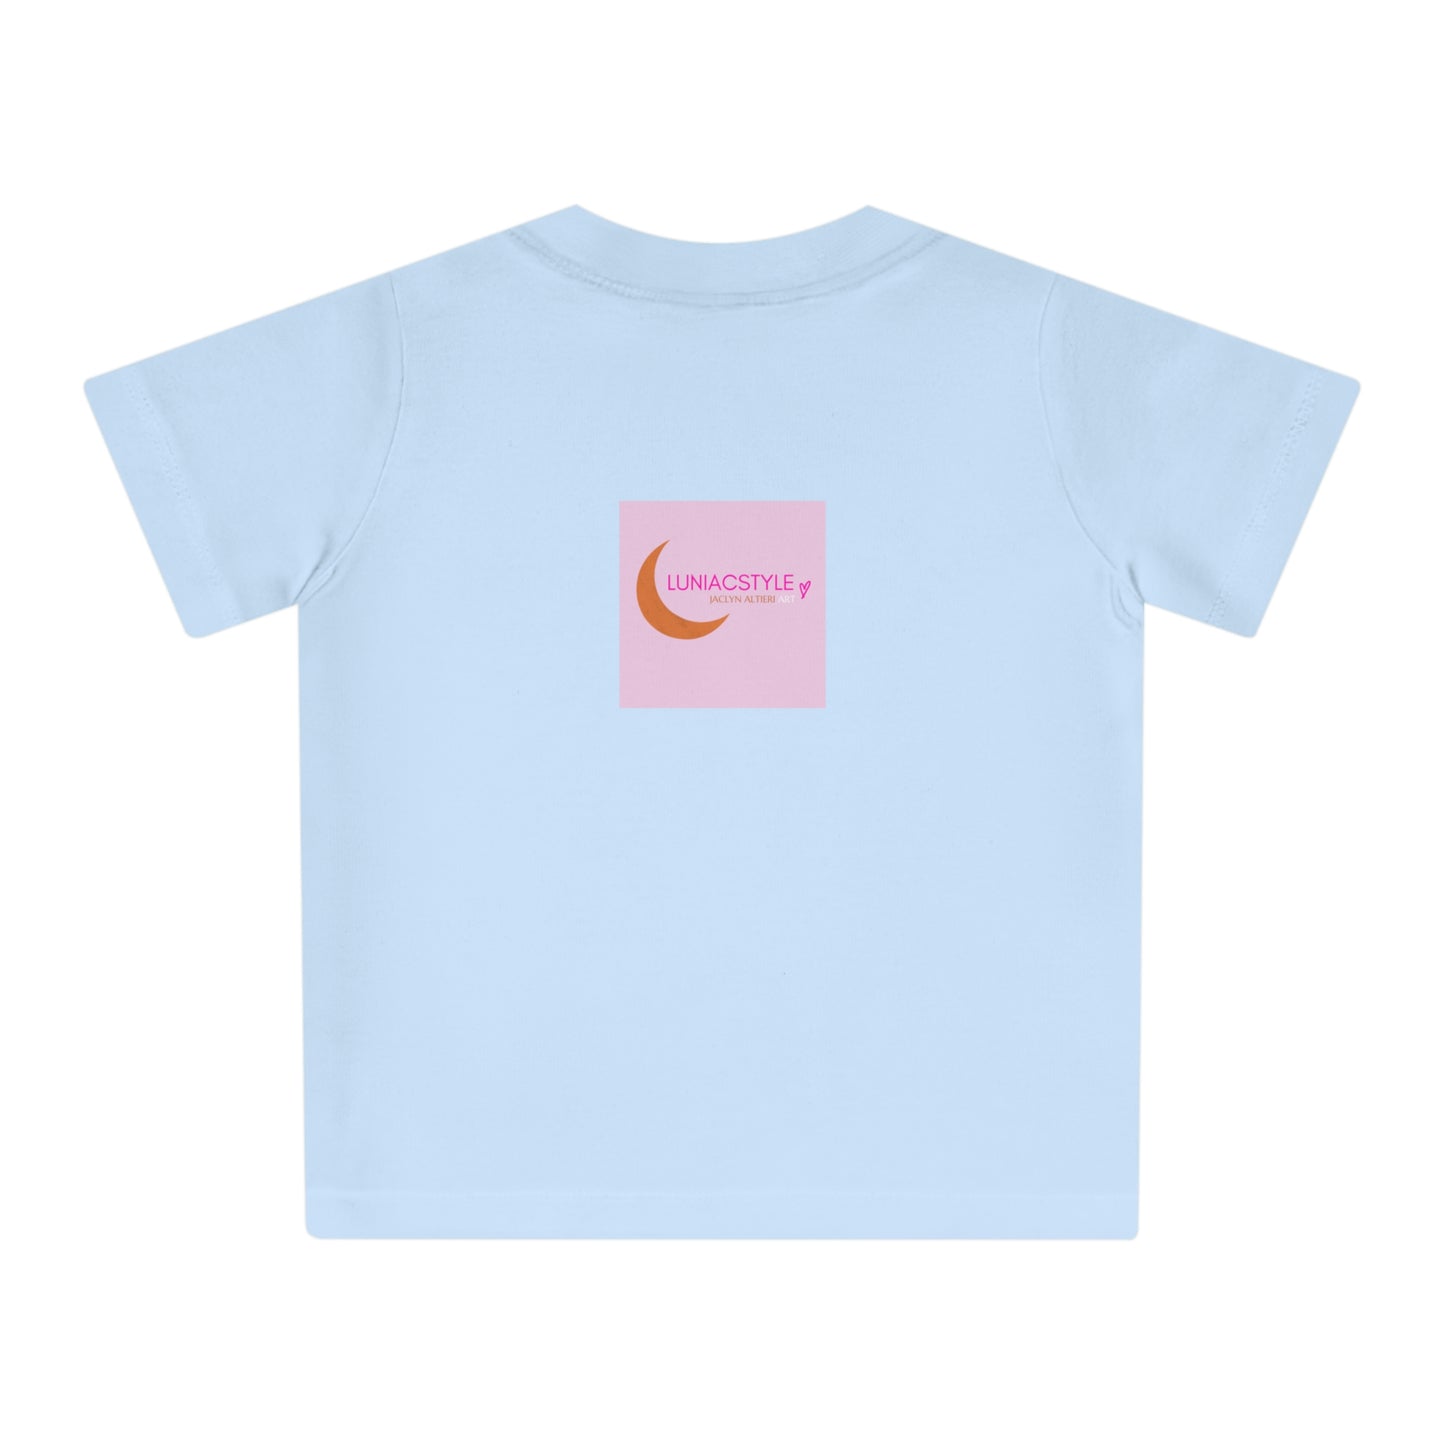 "Friends Who Feel Like Home" Girl Talk Art Series Baby T-Shirt